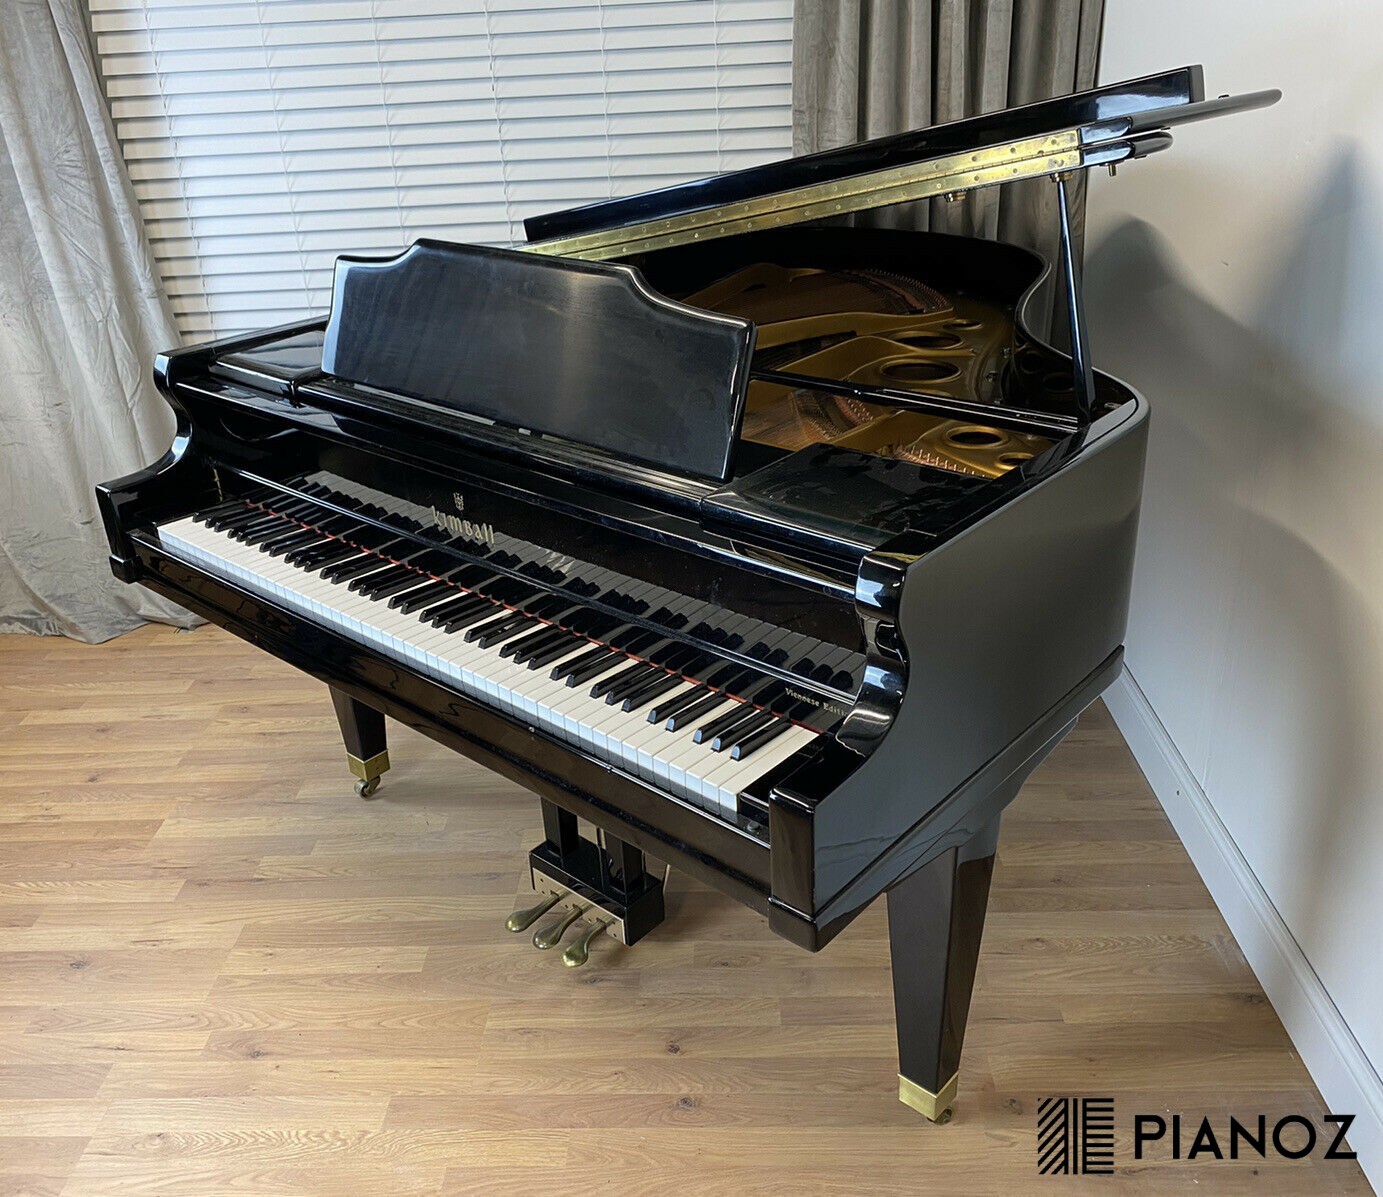 Kimball 170 "Bosendorfer" Baby Grand Piano piano for sale in UK